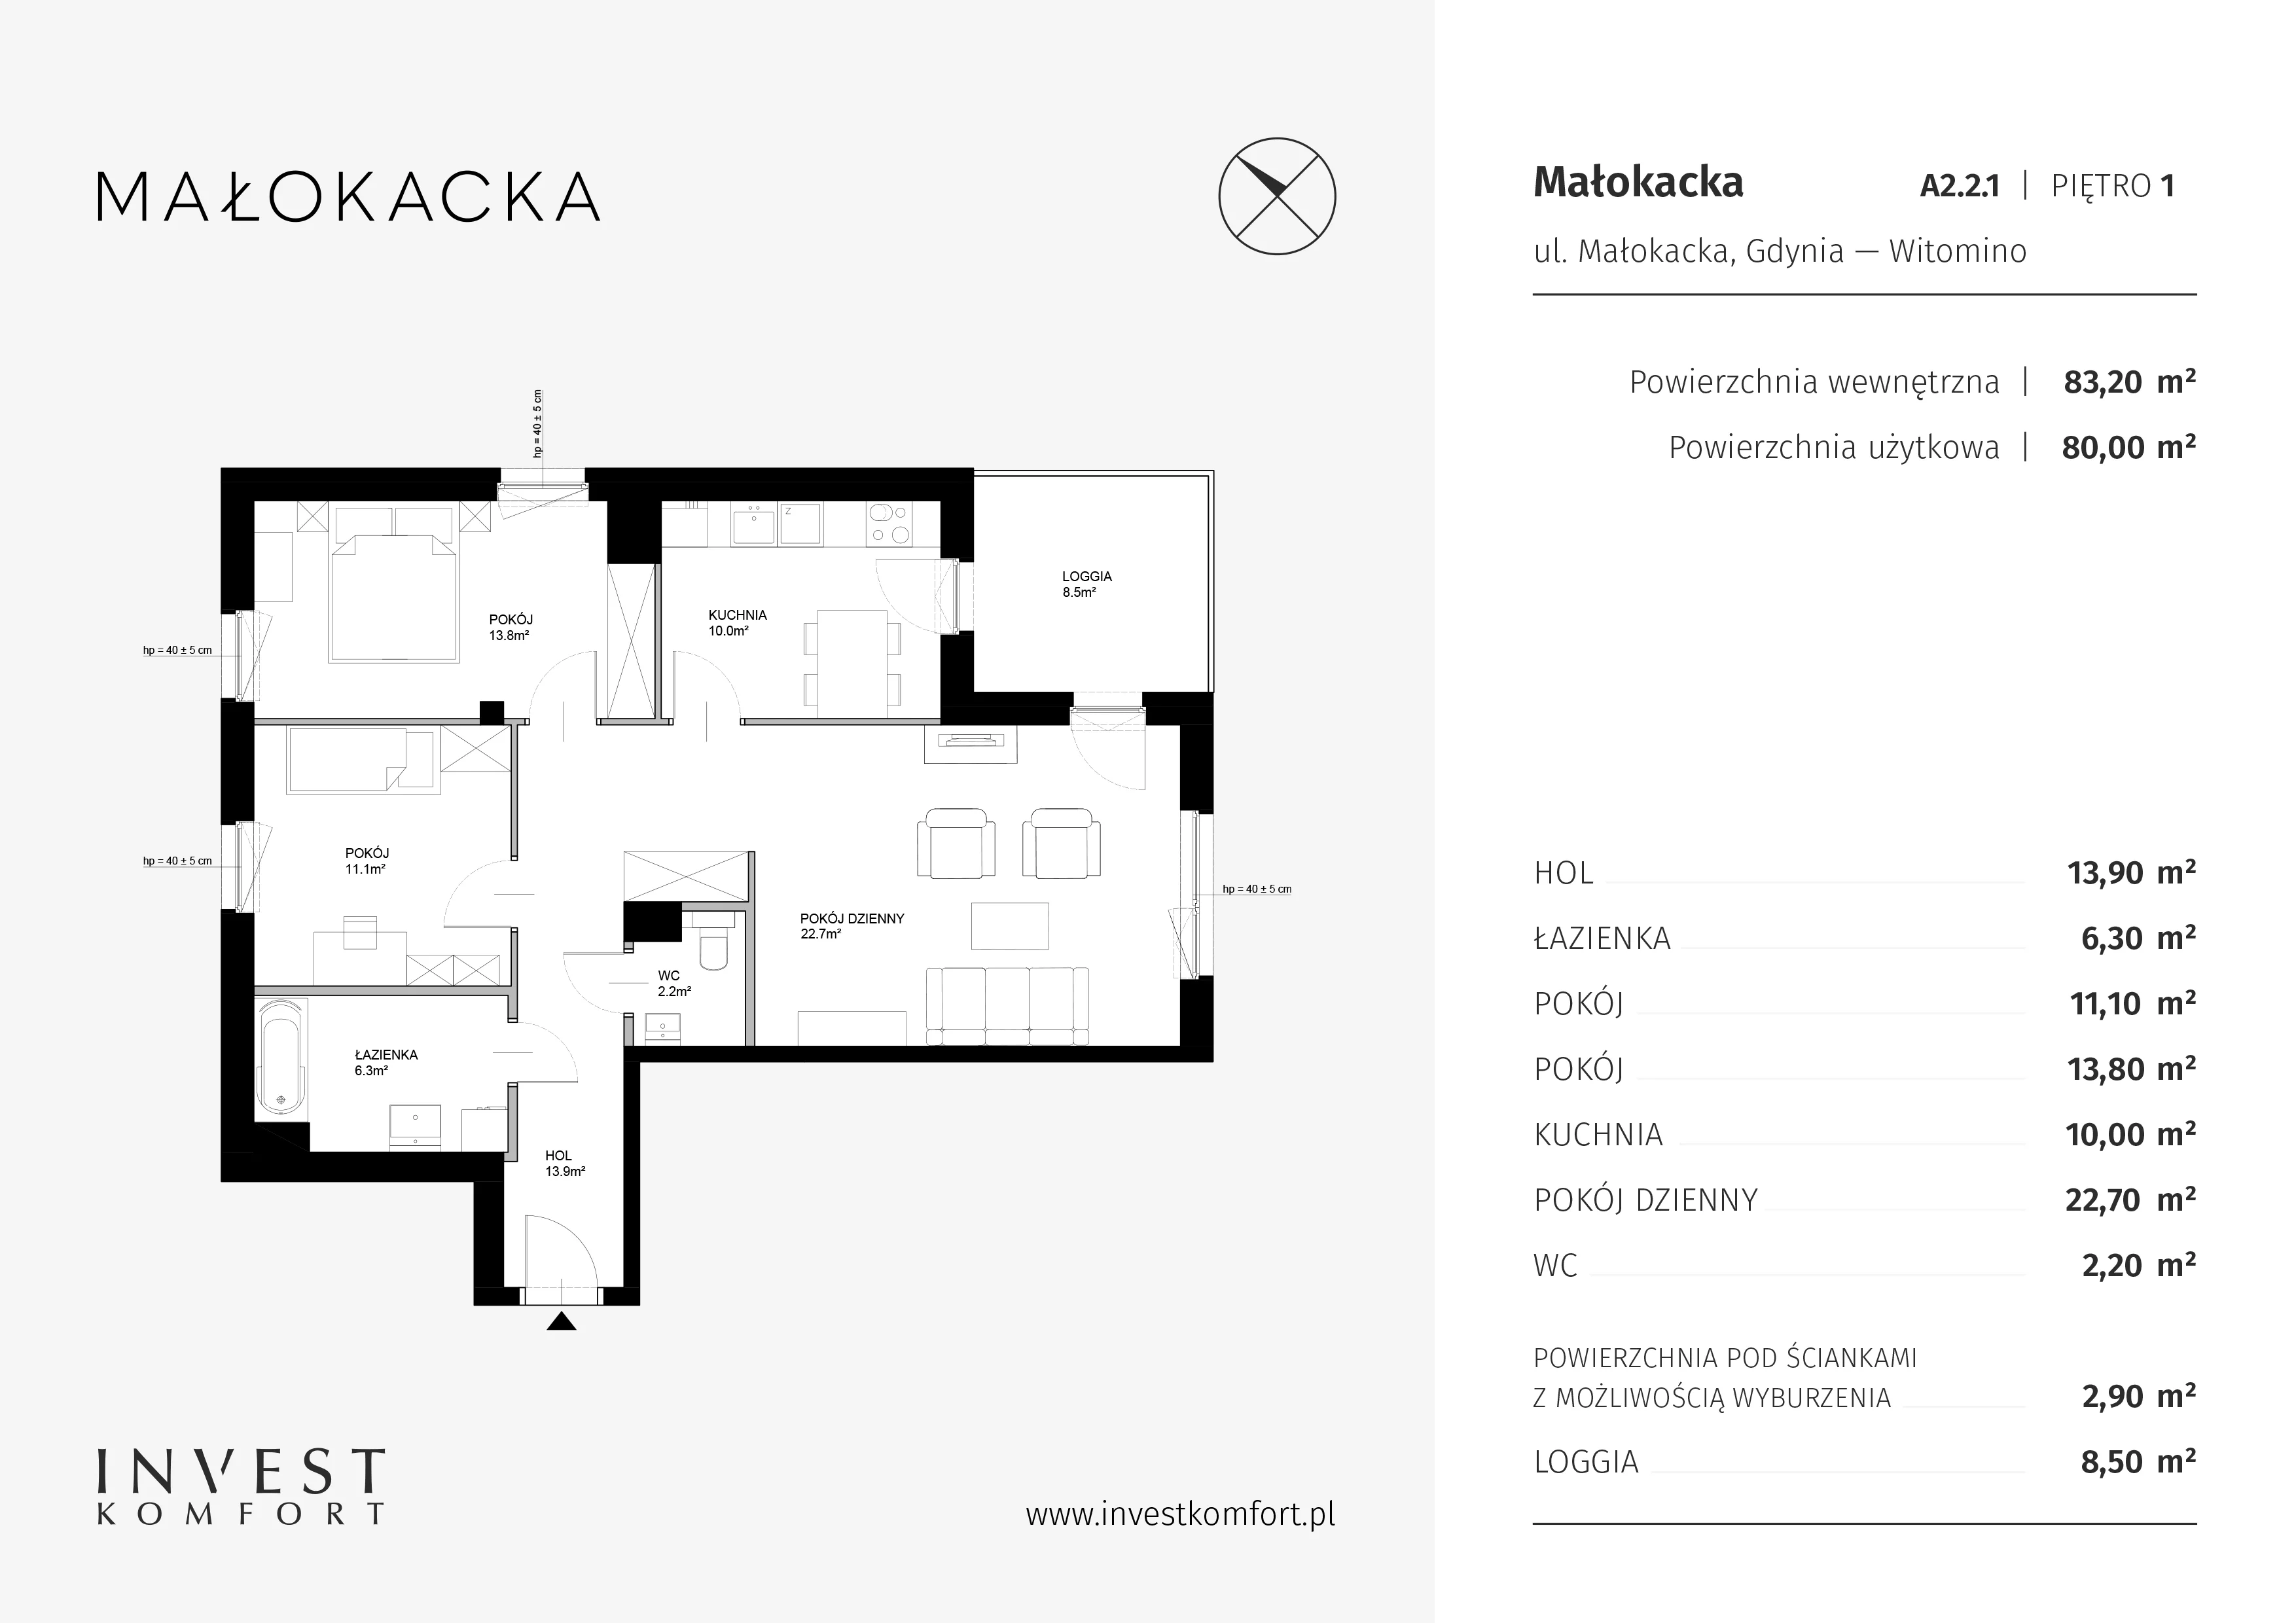 Apartament 83,30 m², piętro 1, oferta nr A2.2.1, Małokacka, Gdynia, Witomino, ul. Małokacka